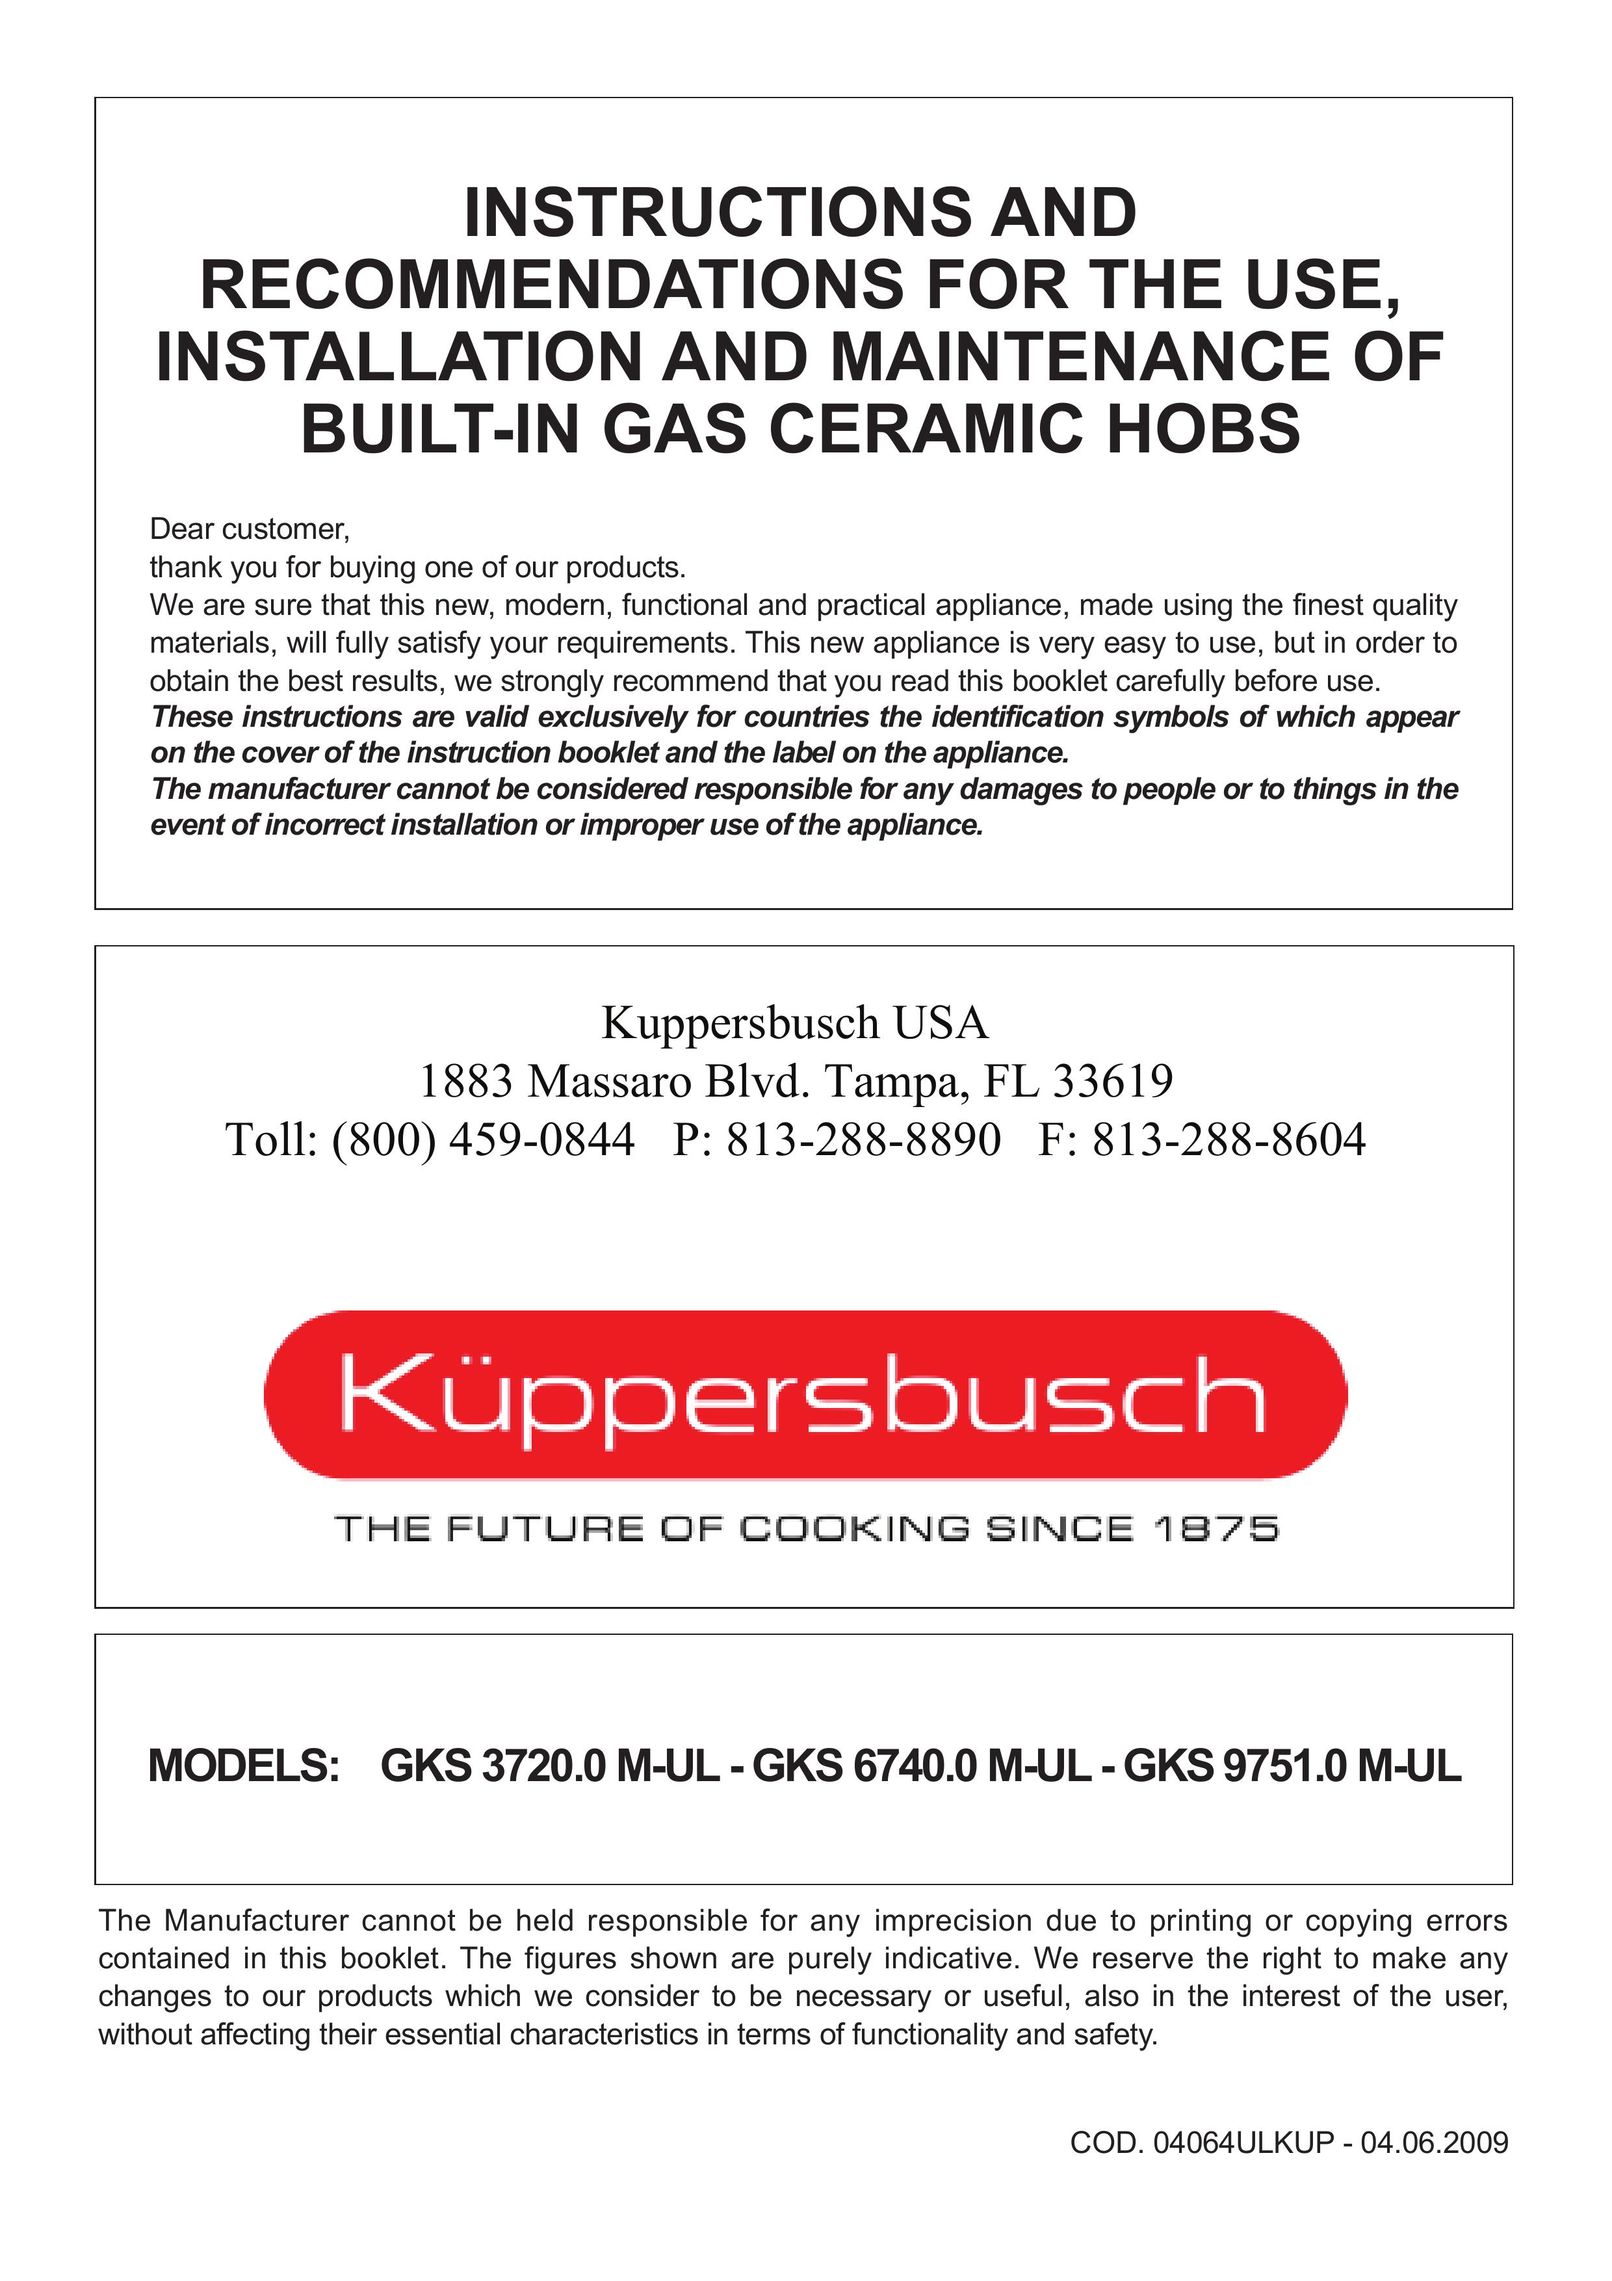 Kuppersbusch USA GKS 3720.0 M-UL Cooktop User Manual